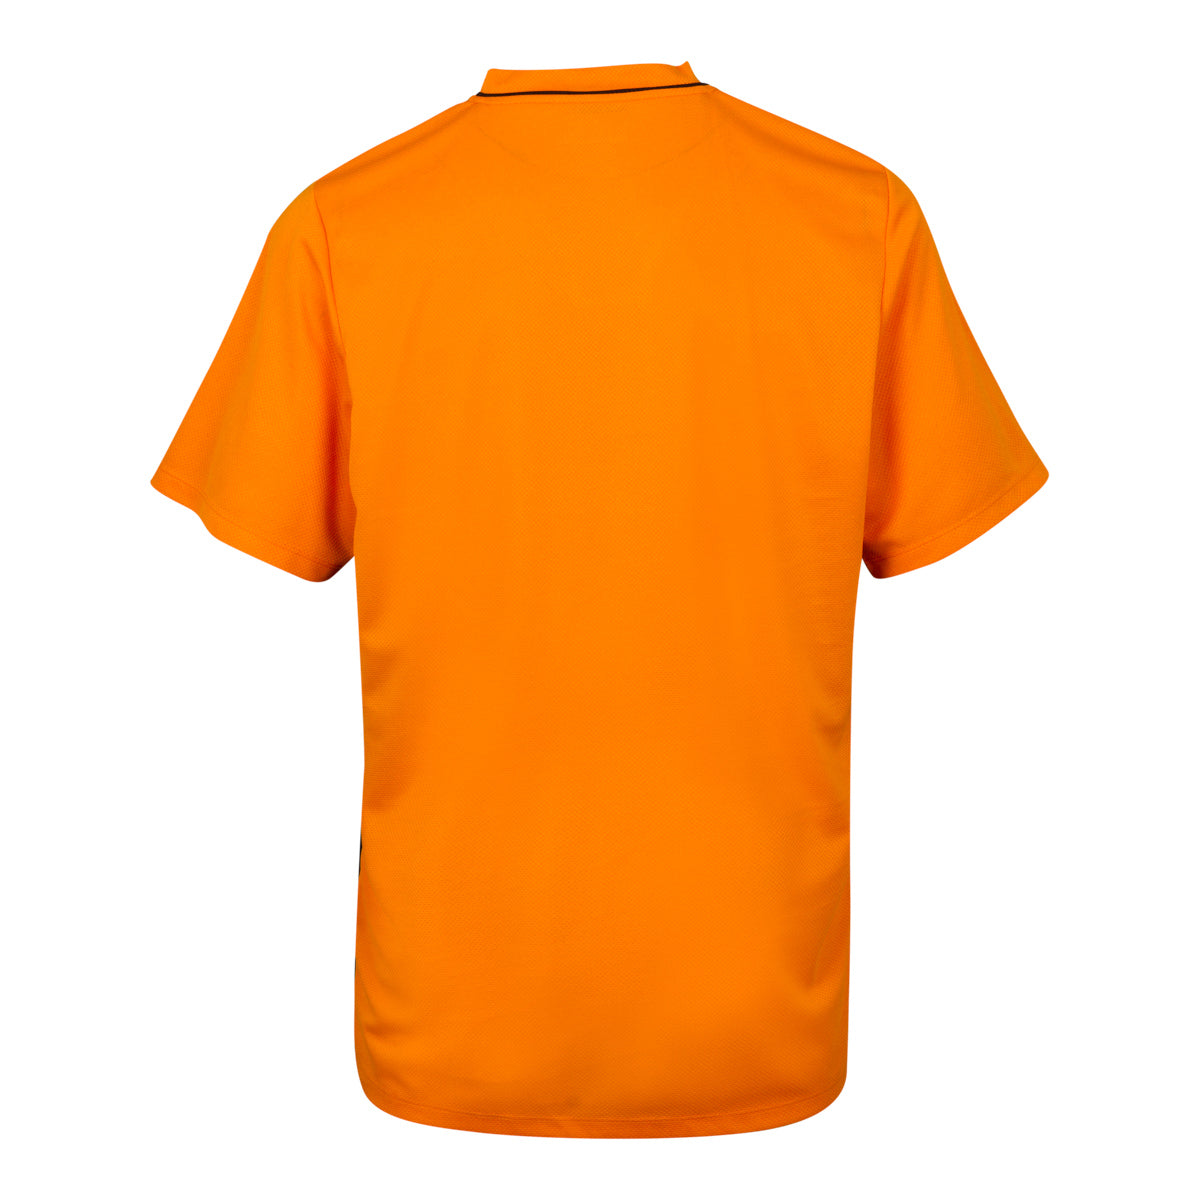 Maillot Basket Calascia Orange Homme - Image 2